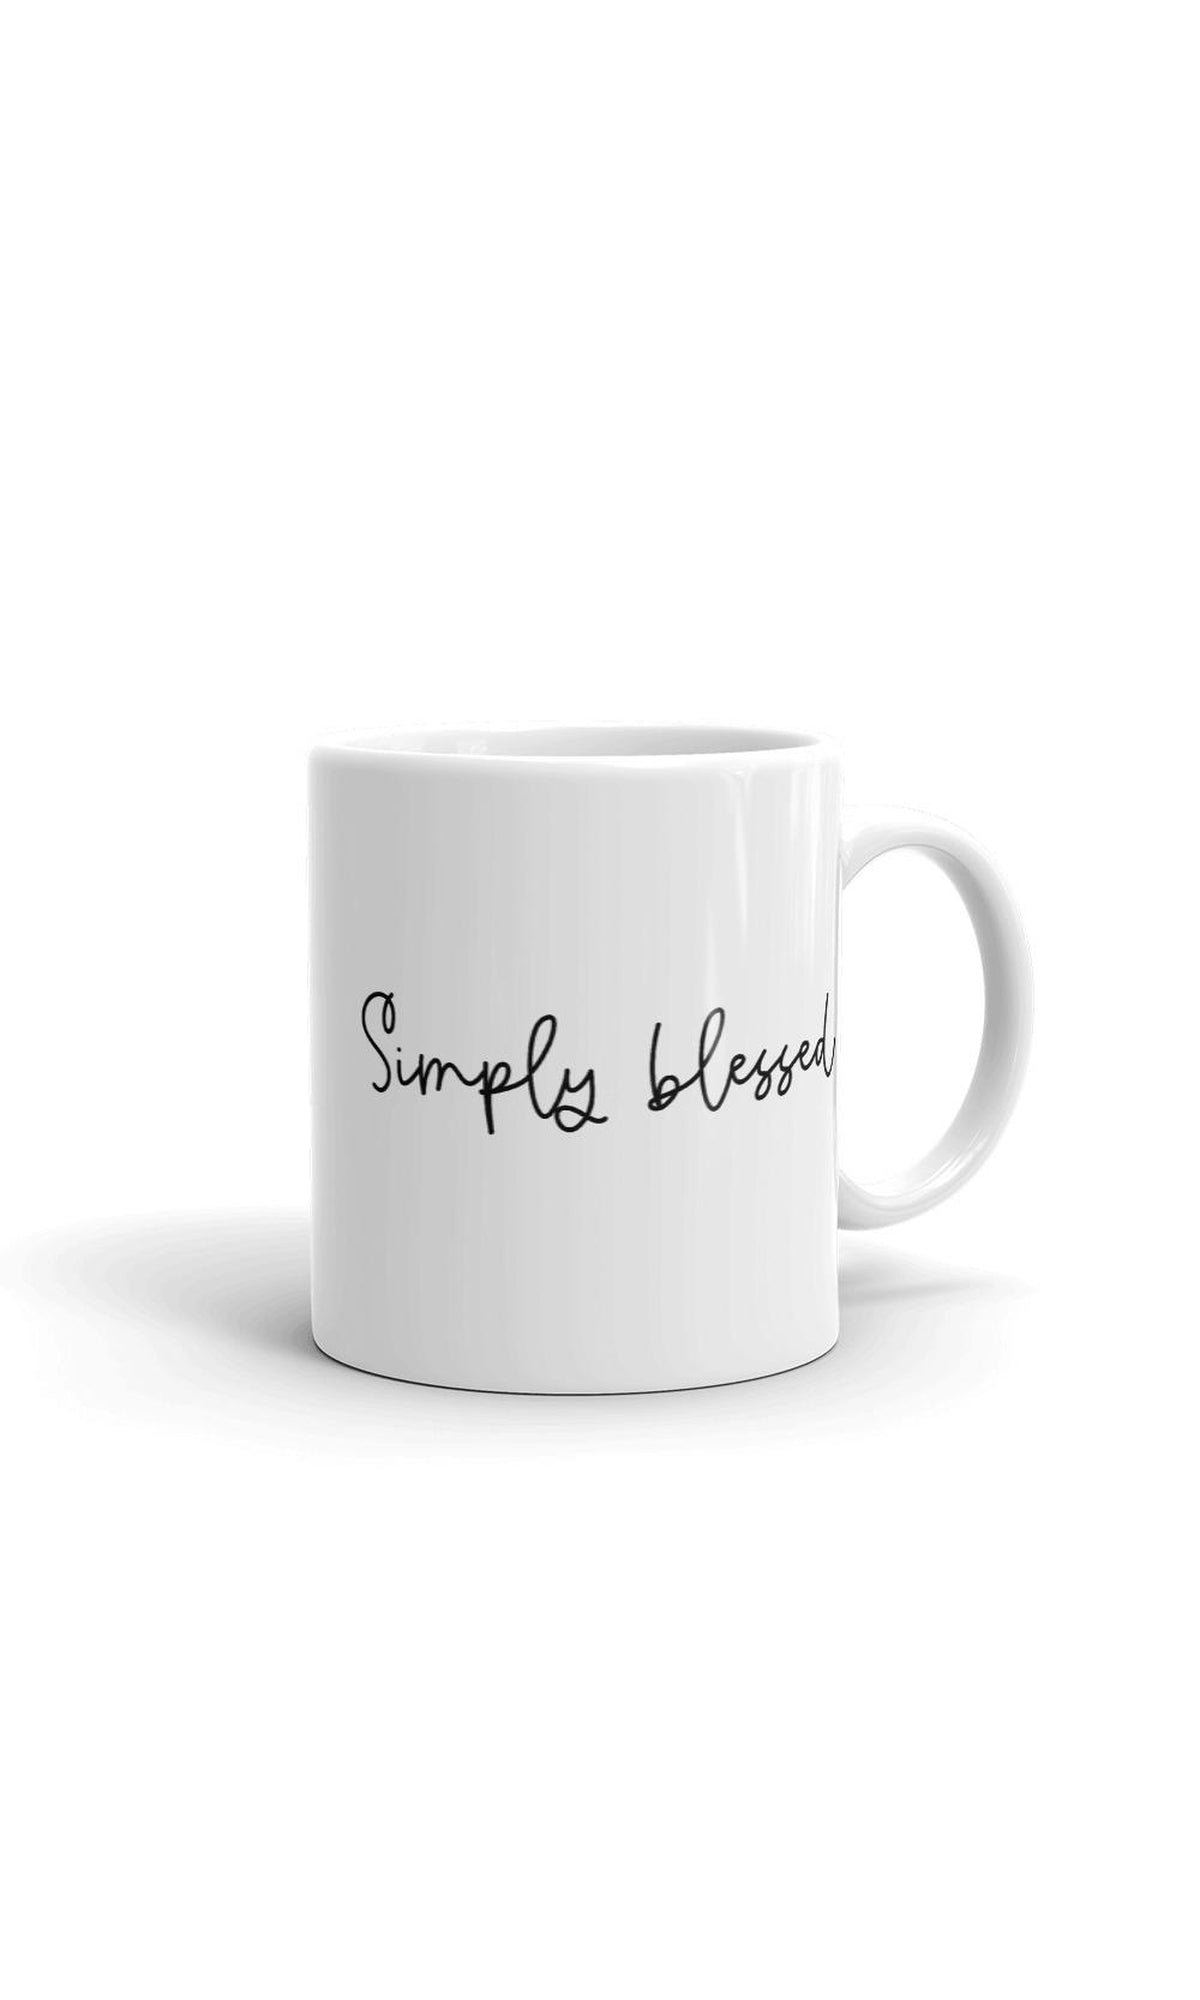 Simply Blessed Coffee Mug